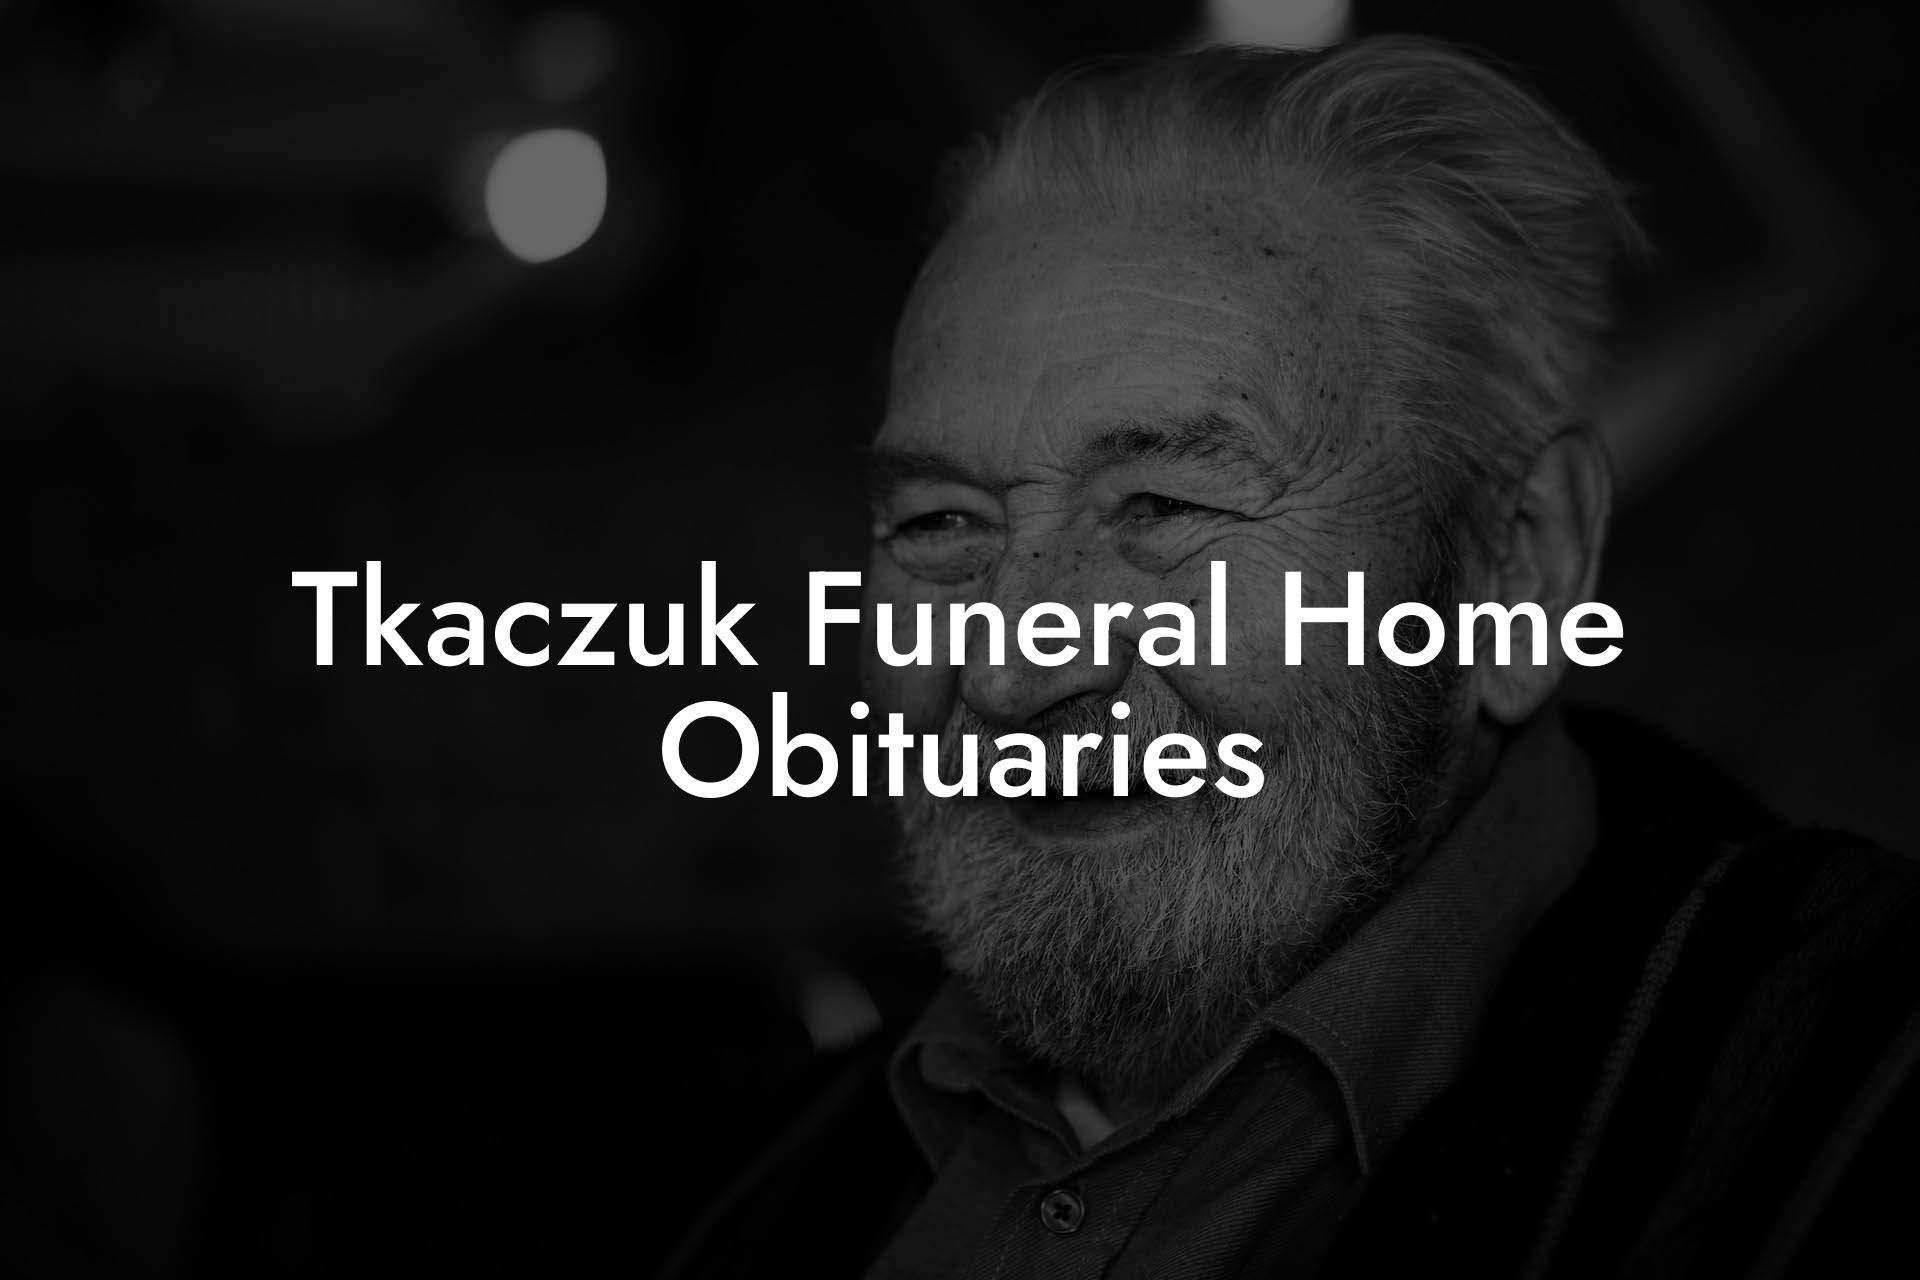 Tkaczuk Funeral Home Obituaries